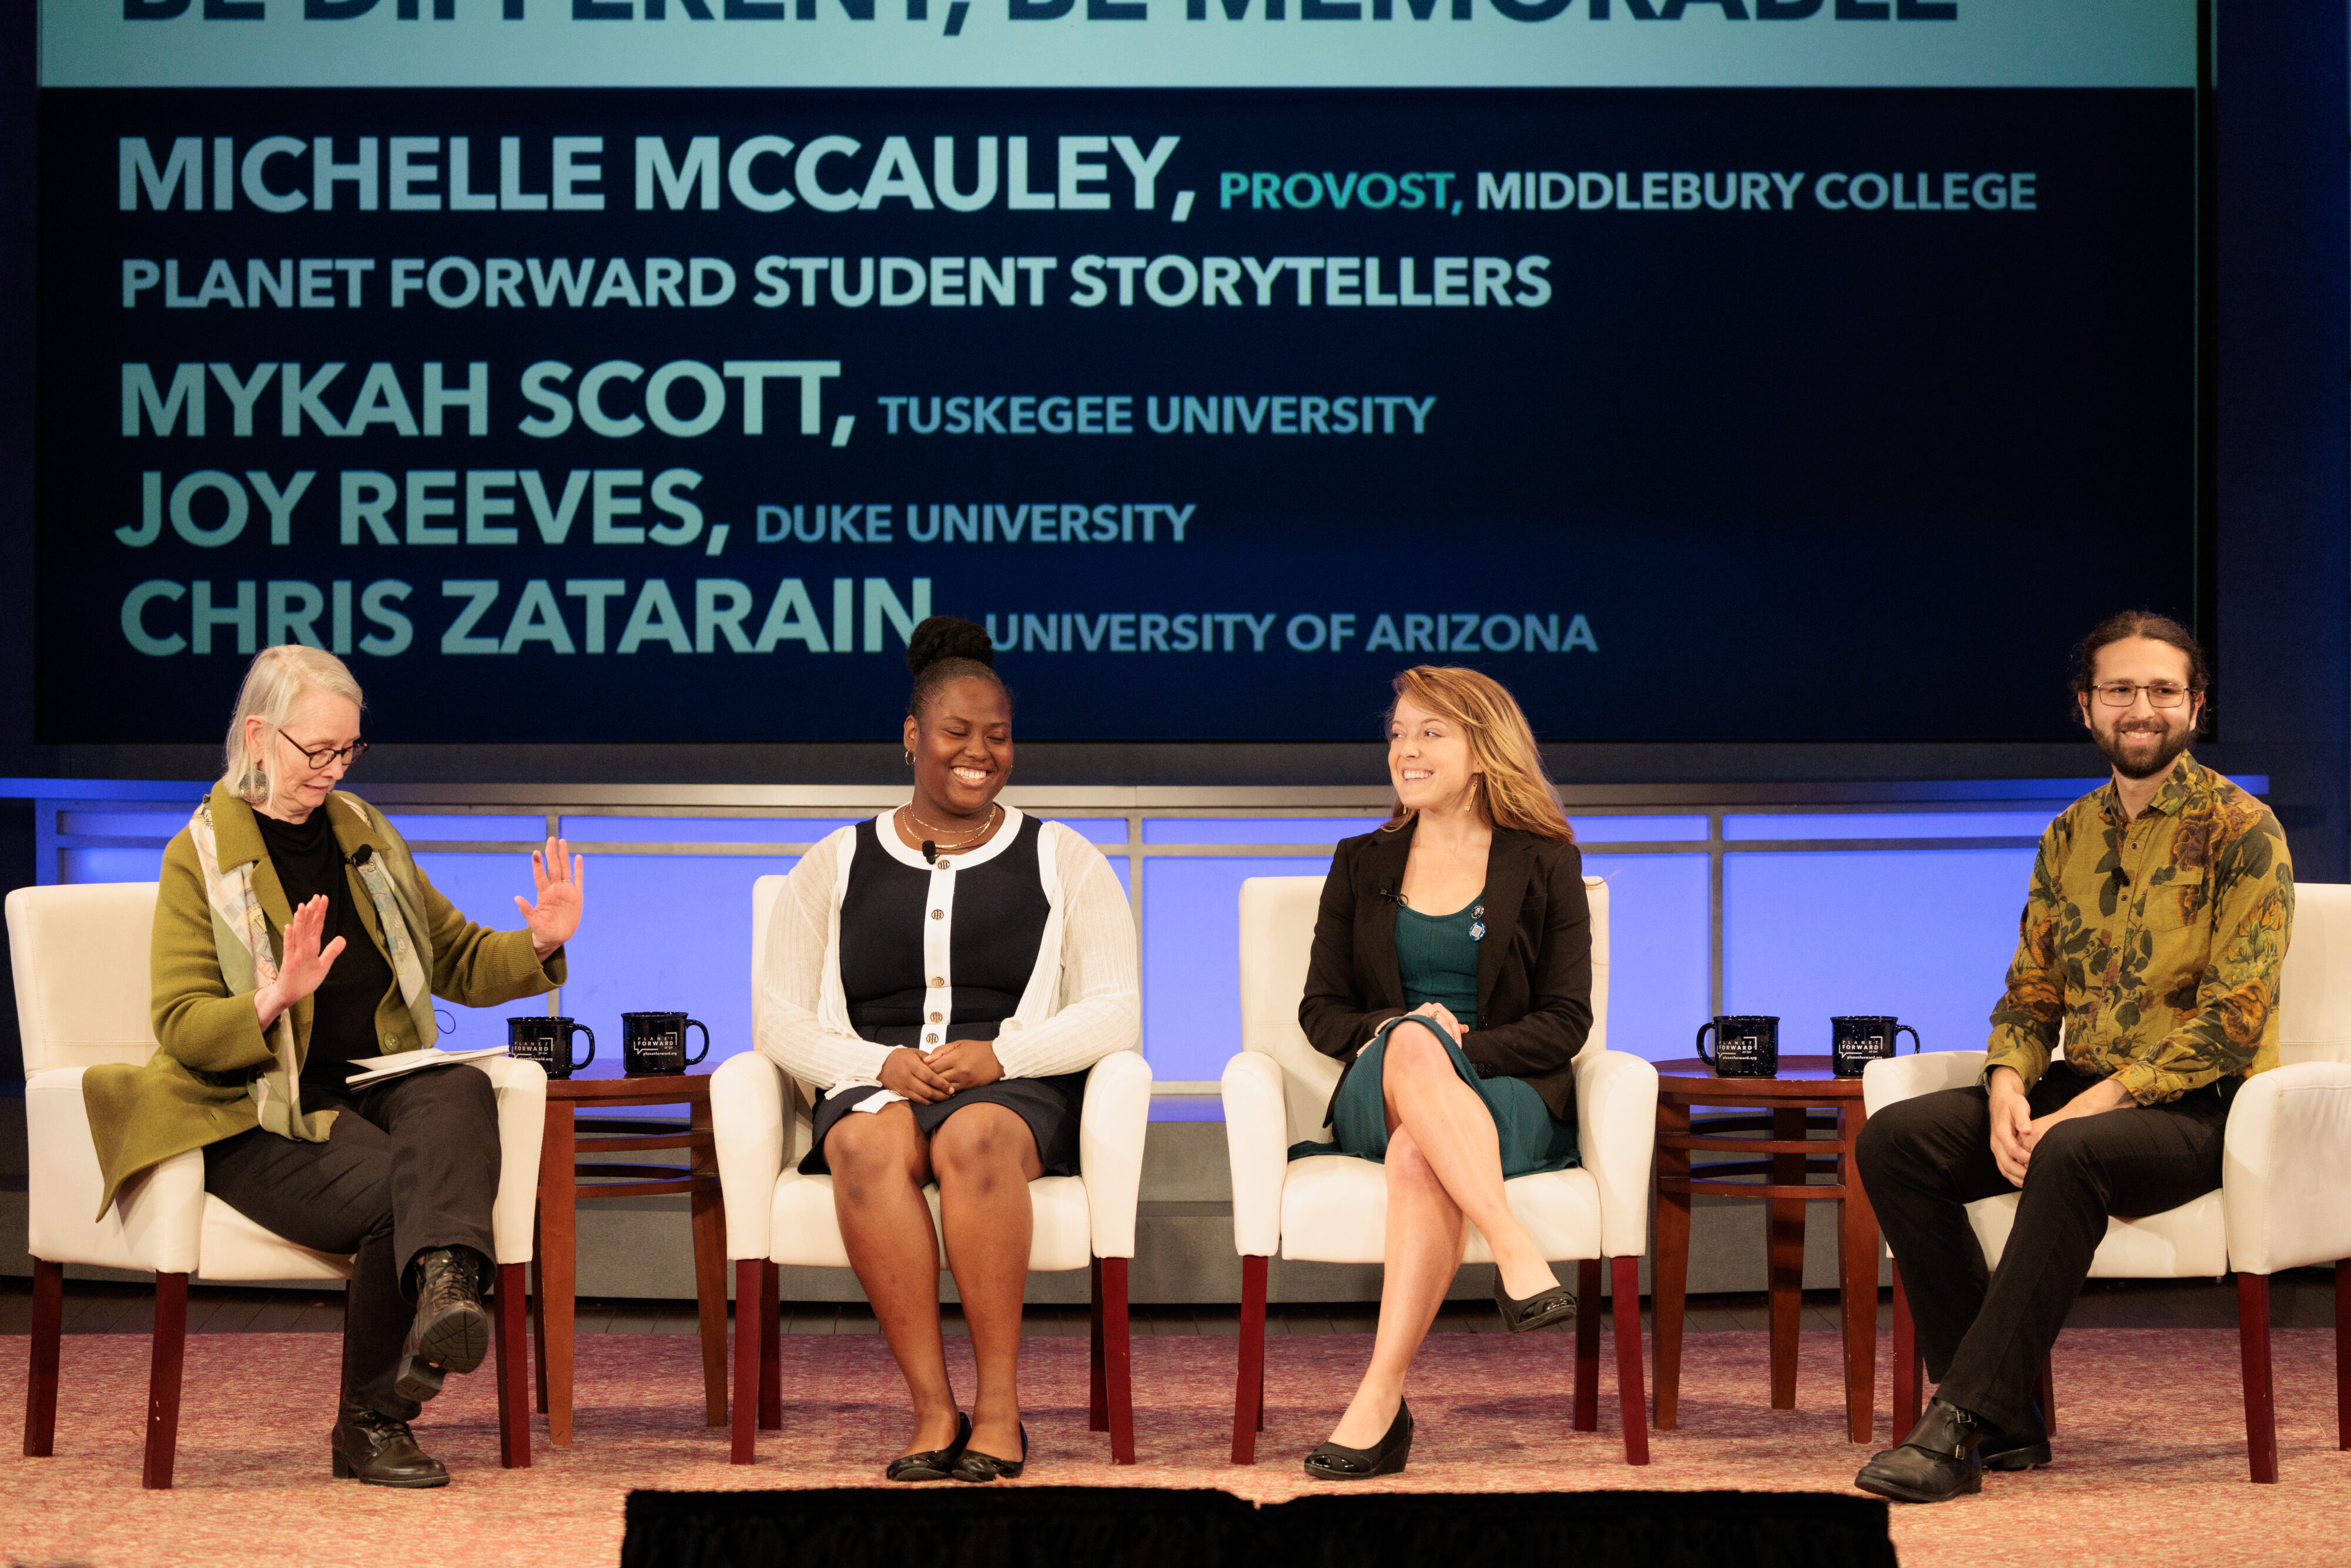 From left: Michelle McCauley, Provost, Middlebury College; Mykah Scott, Tuskegee University; Joy Reeves, Duke University; and Chris Zatarain, University of Arizona.